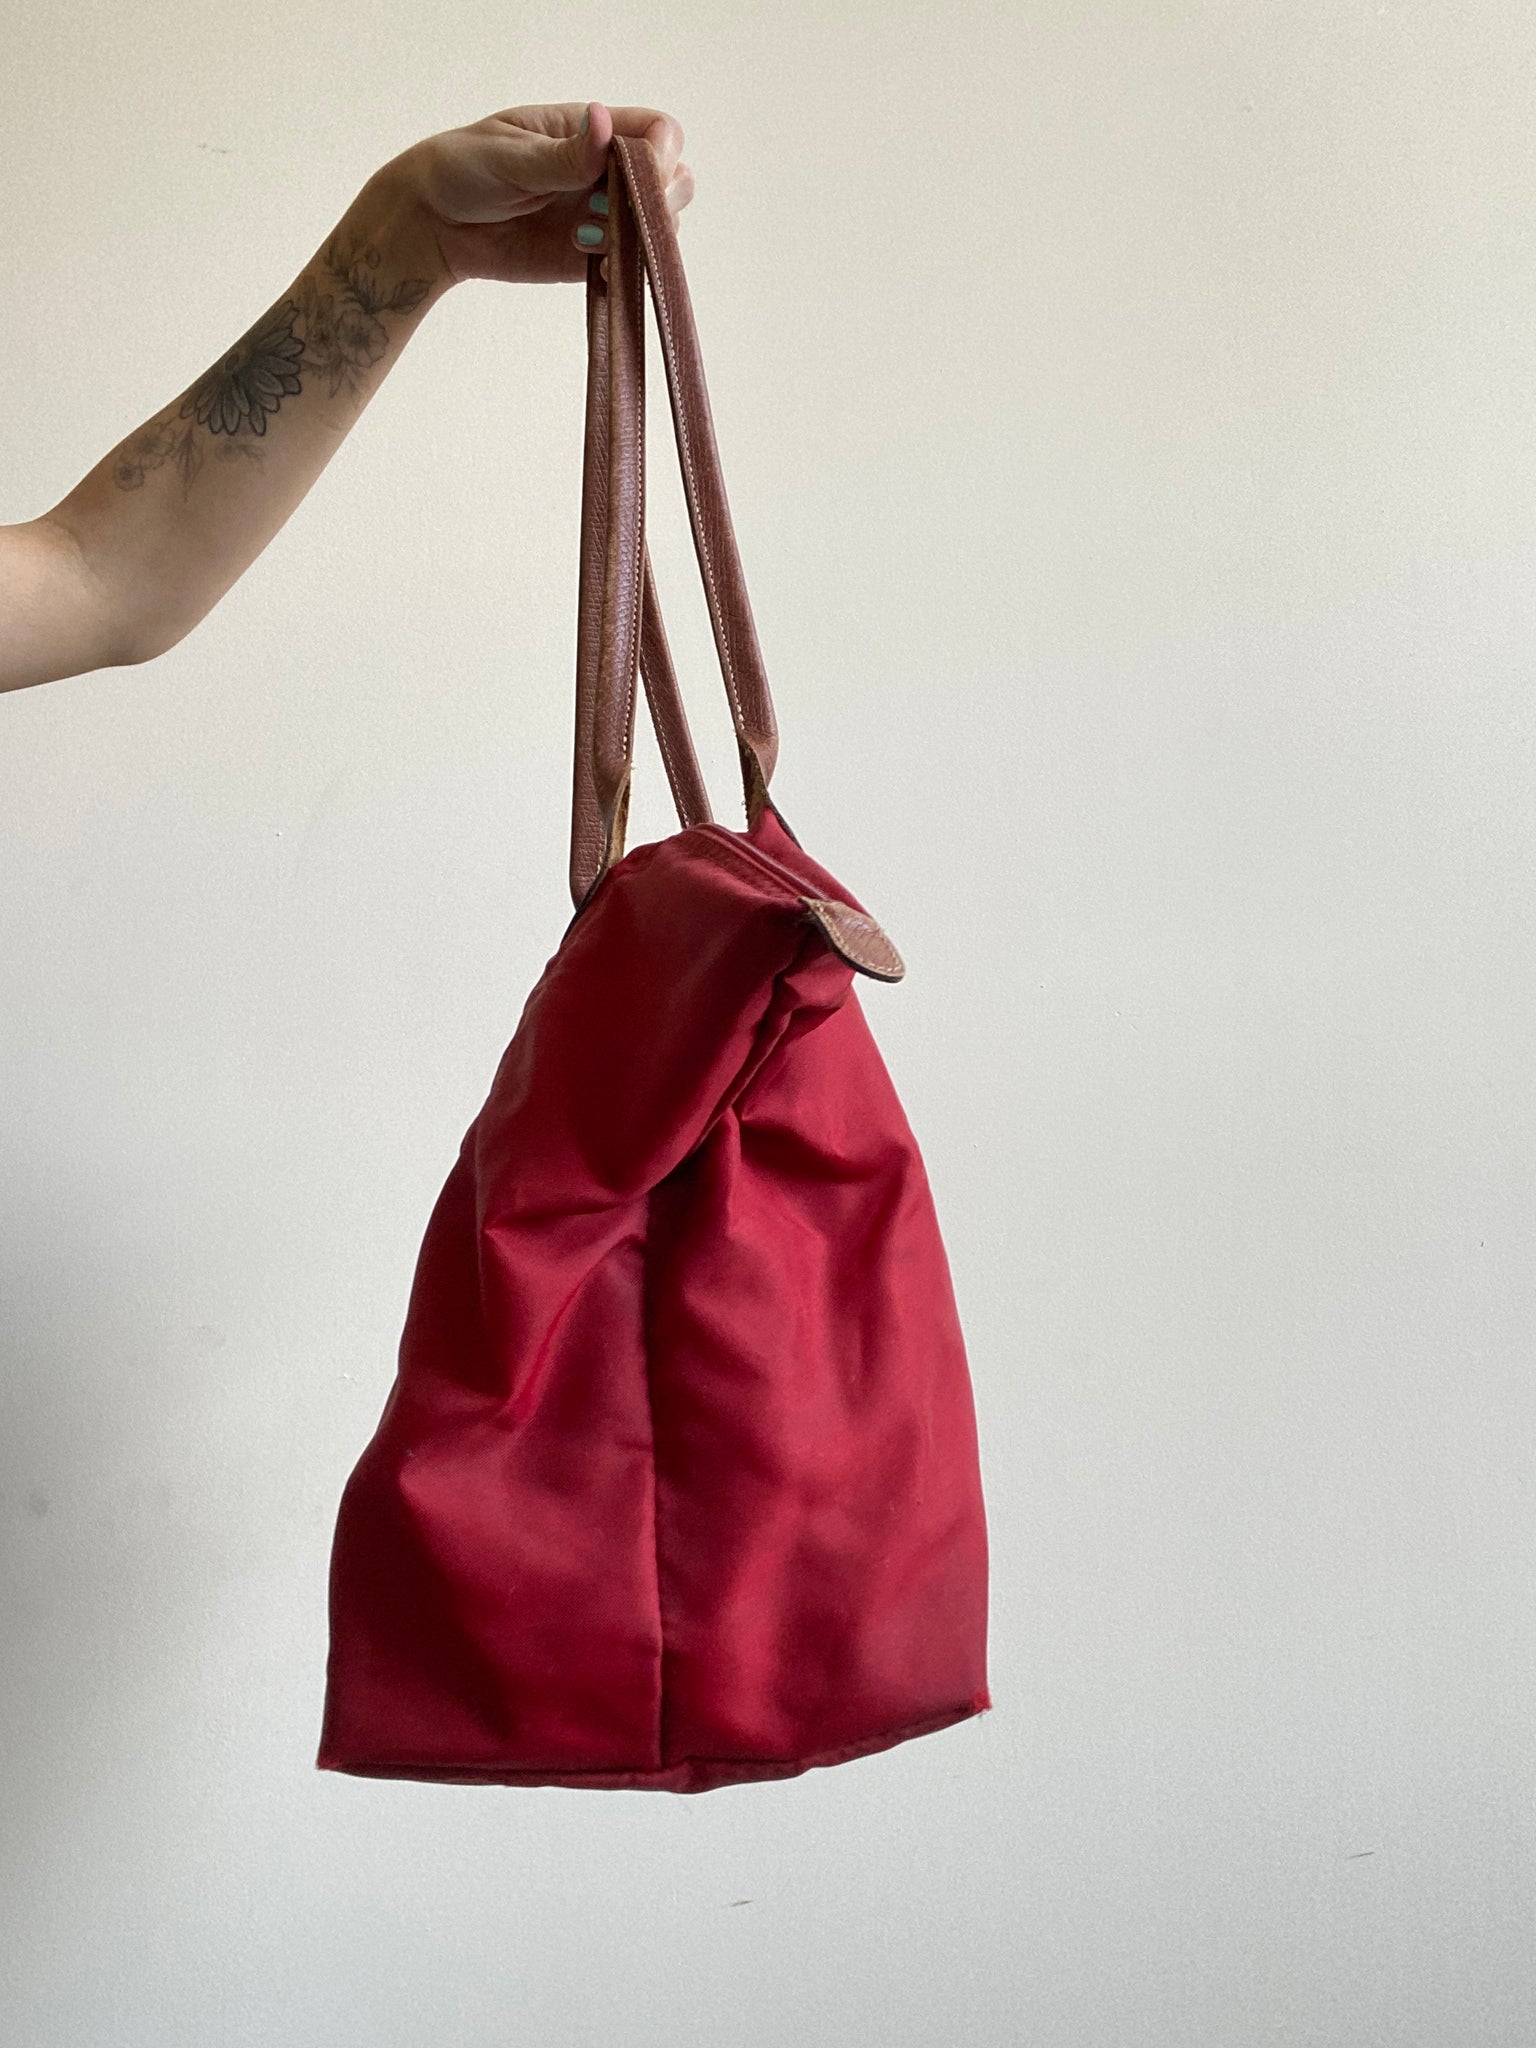 Red Longchamp Tote Bag